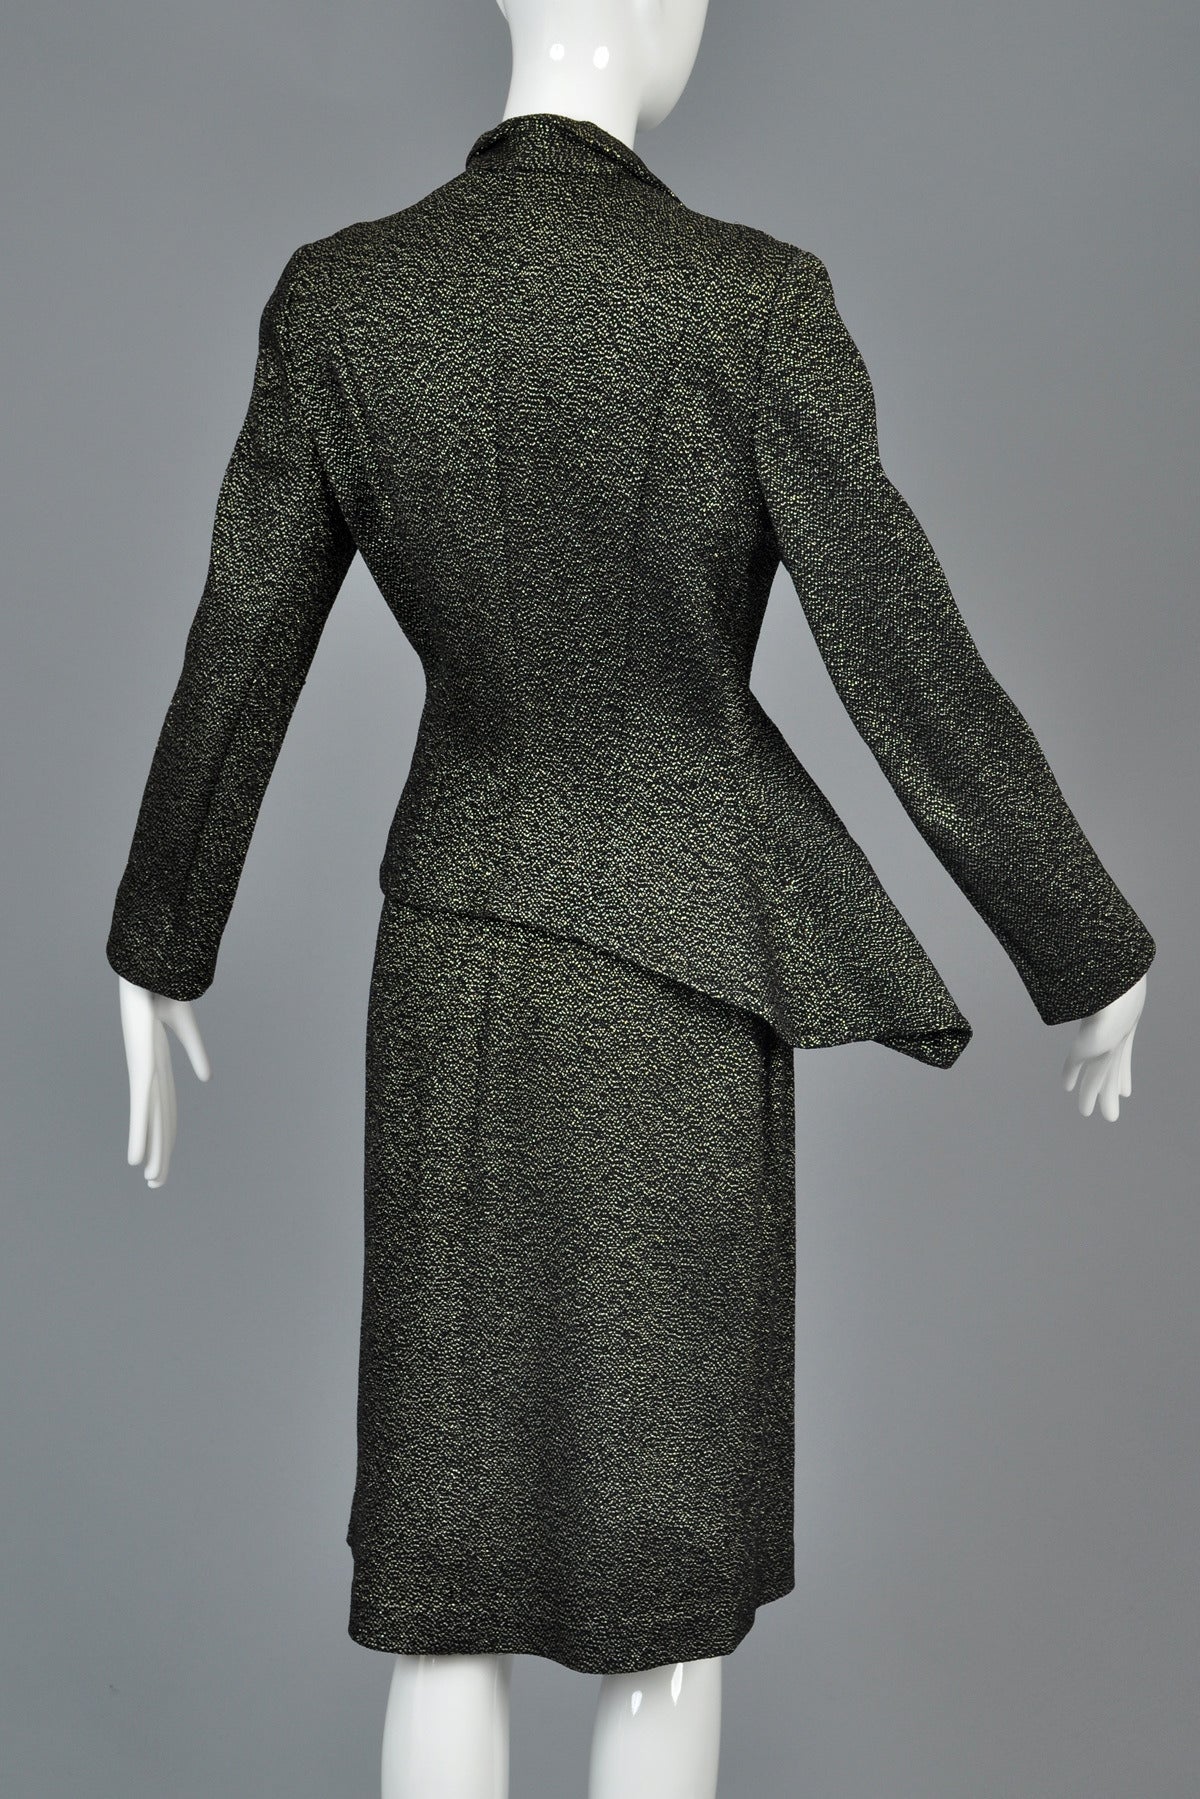 1940s Metallic Asymmetrical Peplum Suit For Sale 4